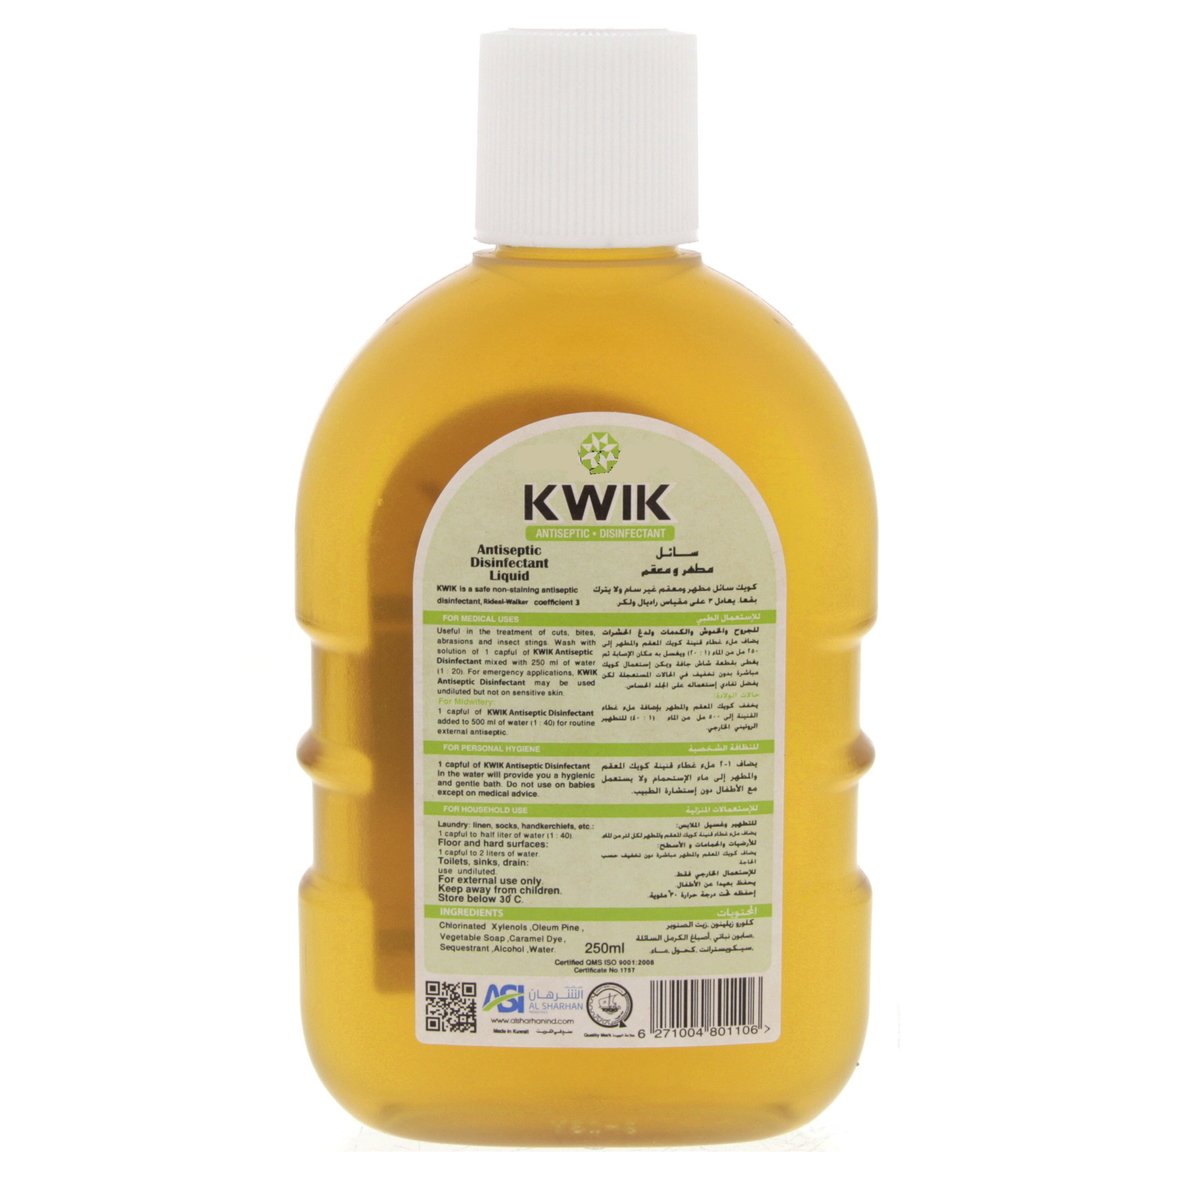 Kwik Antiseptic Disinfectant Anti Bacterial Liquid 250ml